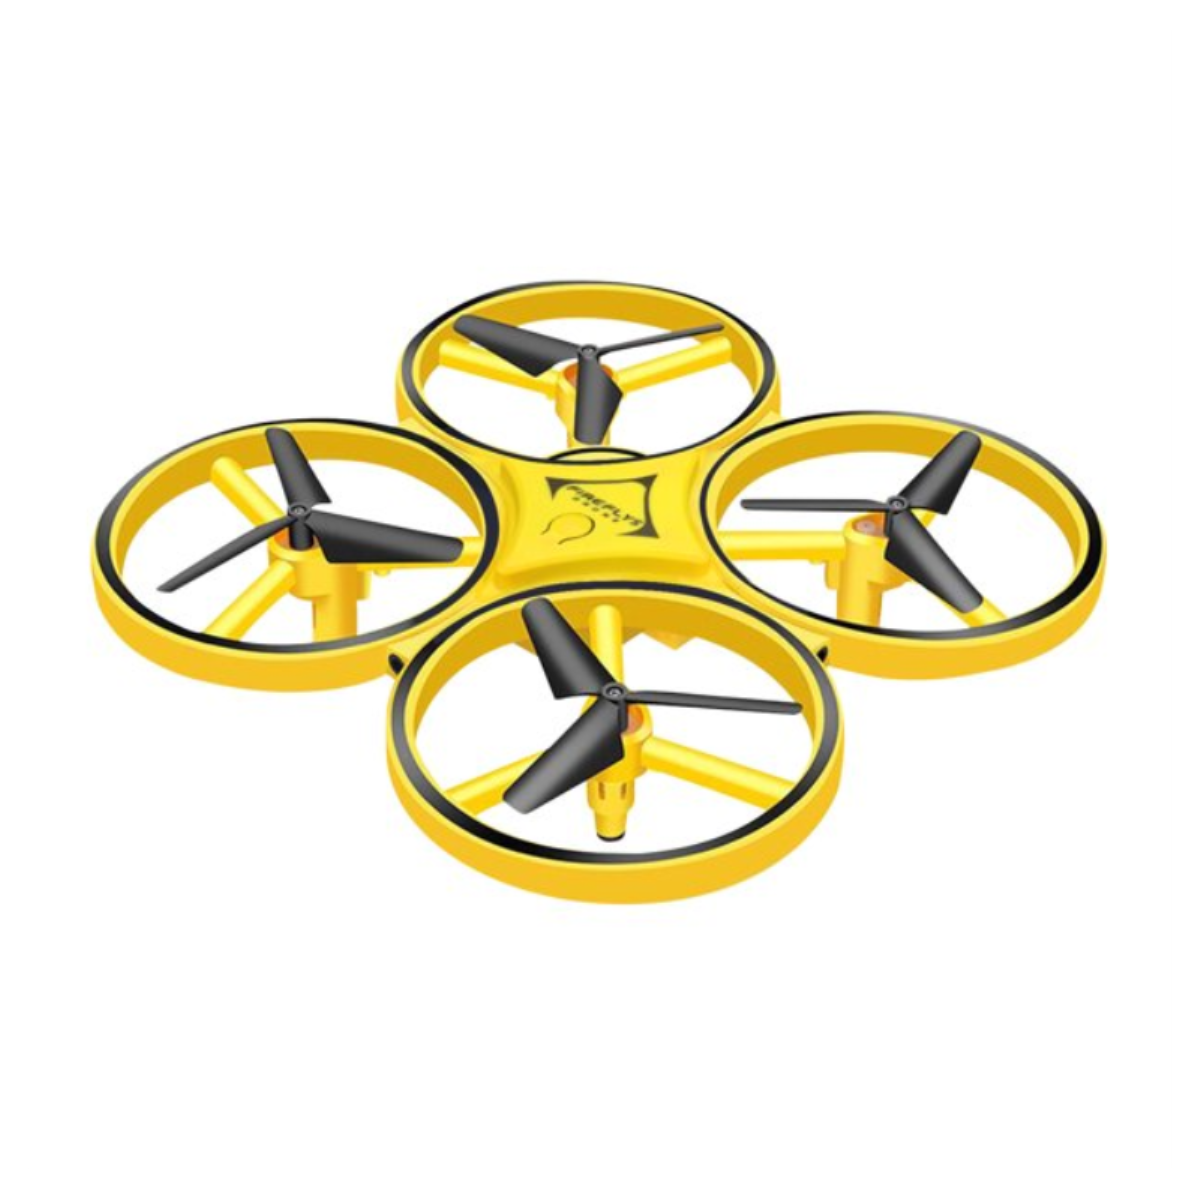 Mini Dron Smartek Firefly Dron Cuadricóptero Con Control Remoto, Iluminación Led Smartek - amarillo - 